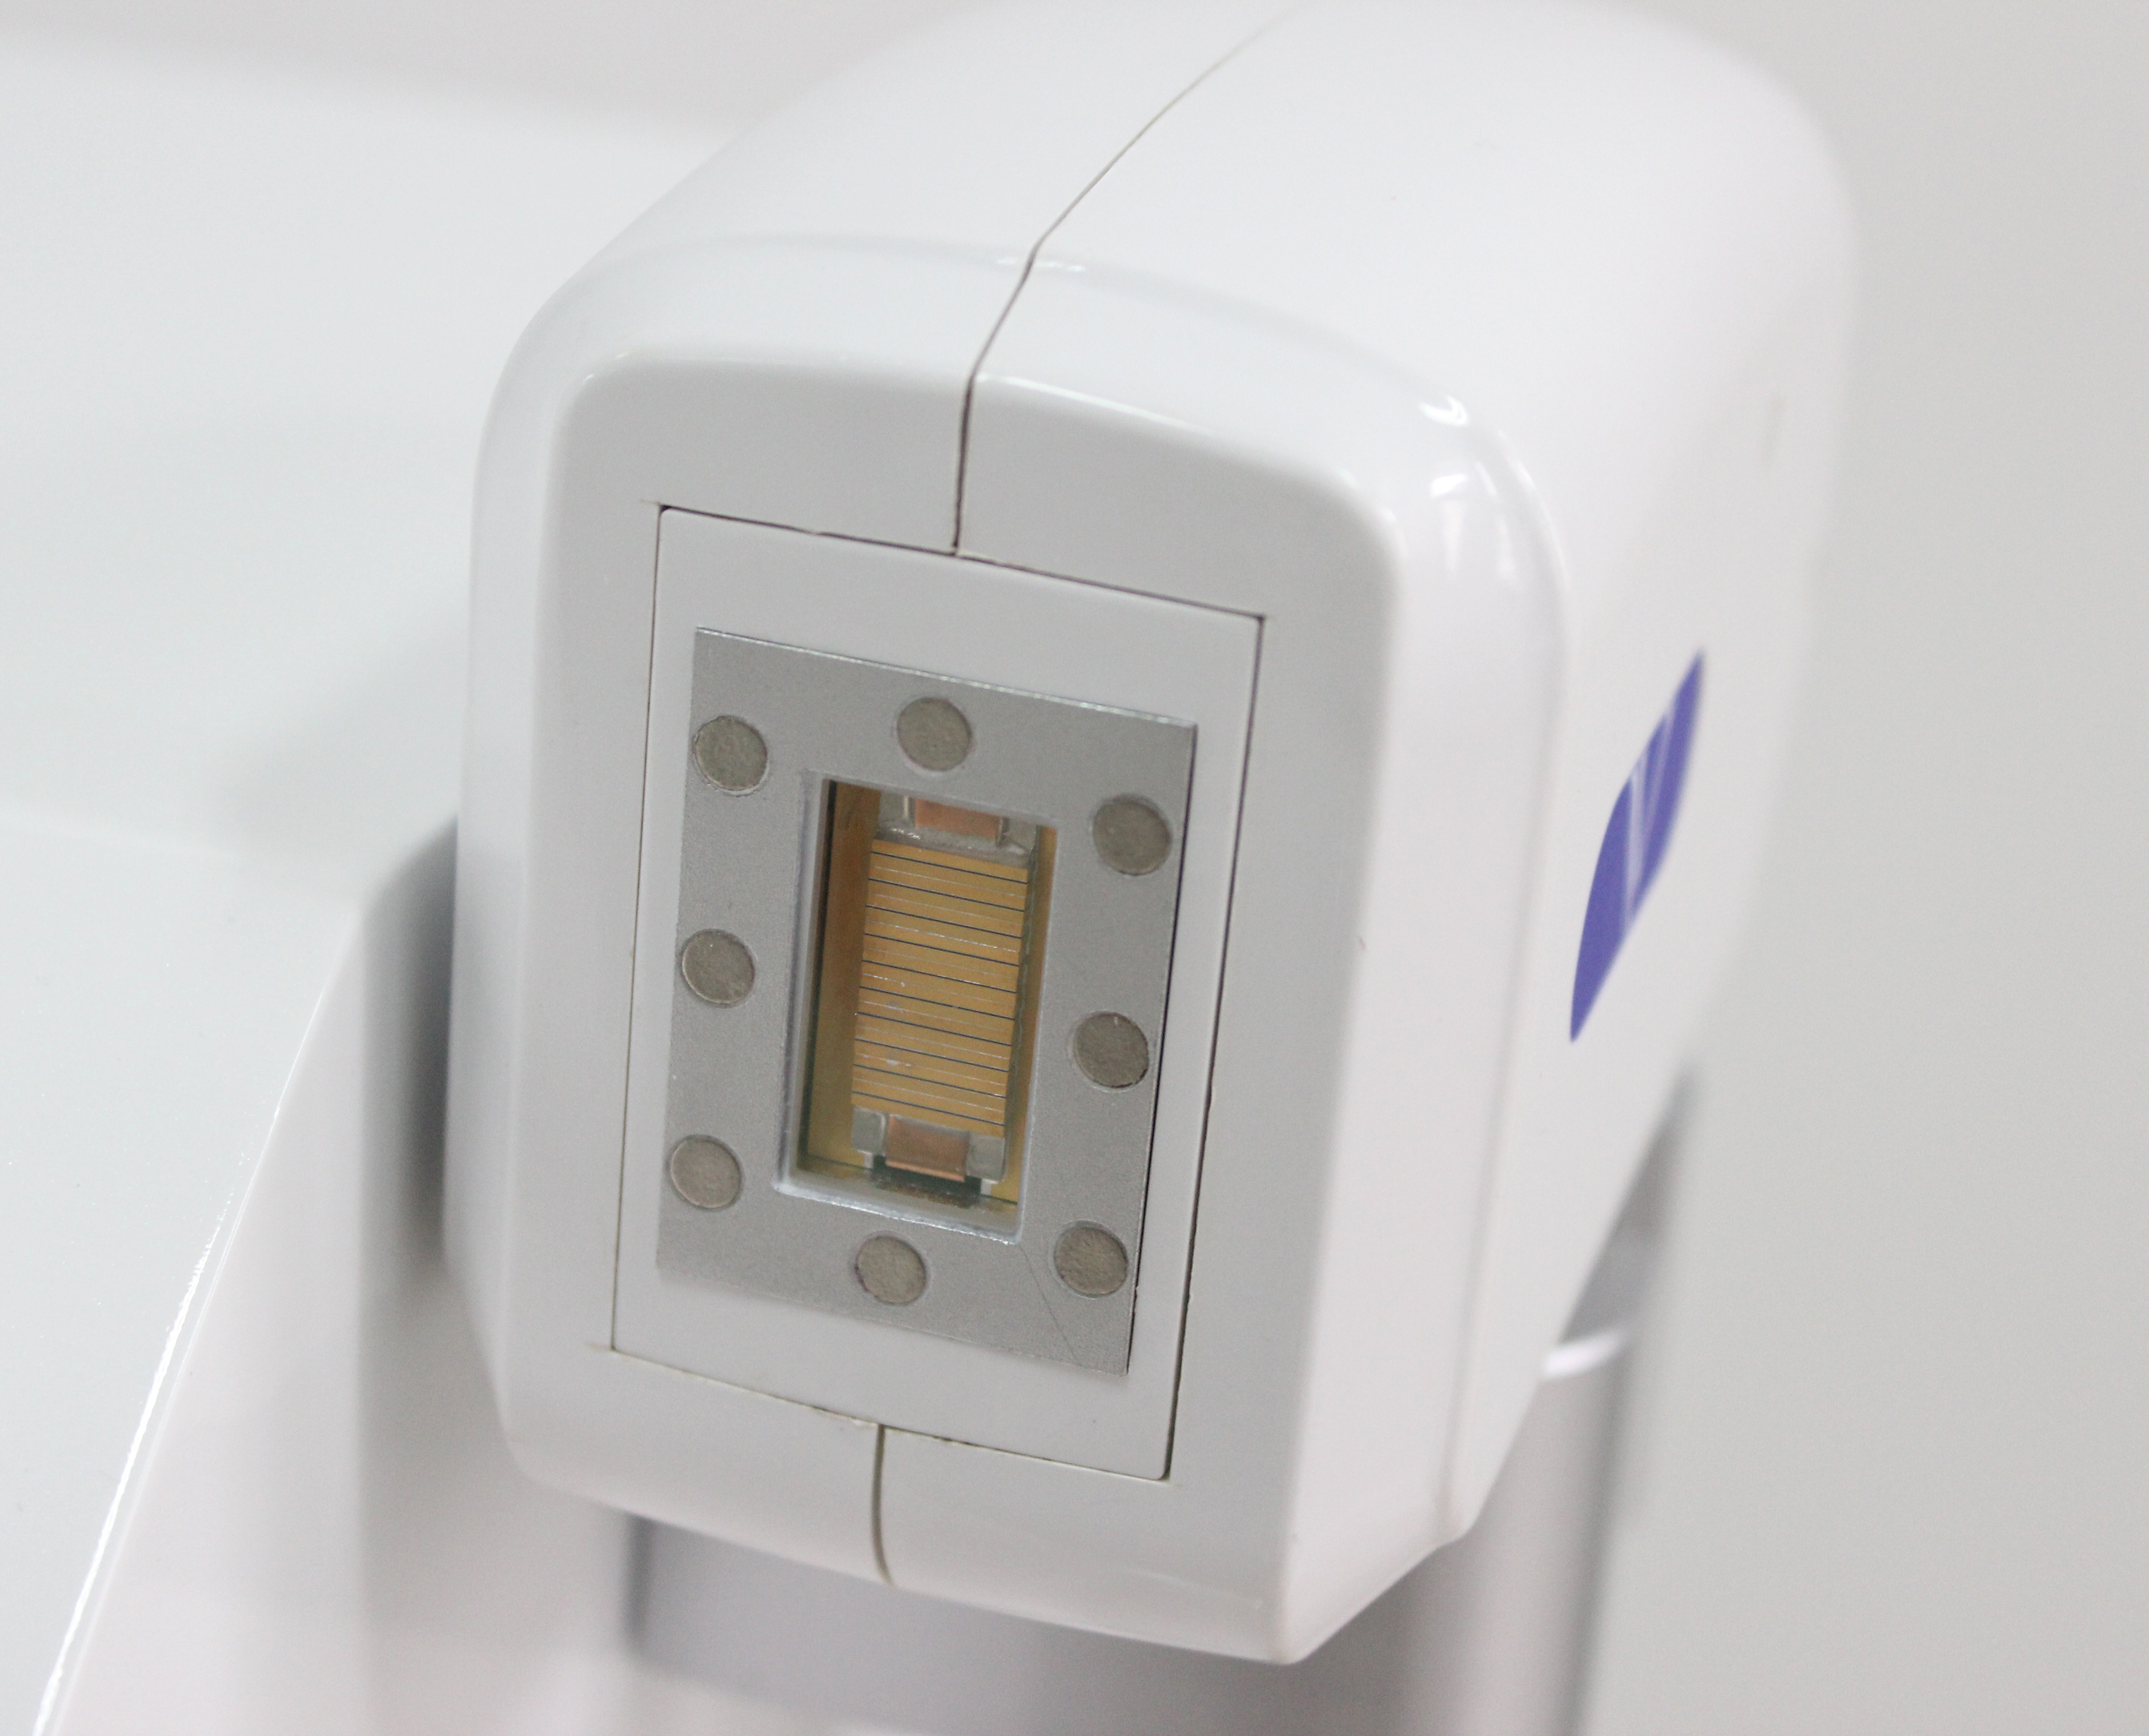 Professionale TUV Medical CE Approvato diodo laser 808 nm/epilatore laser/diodo laser 755 808 1064